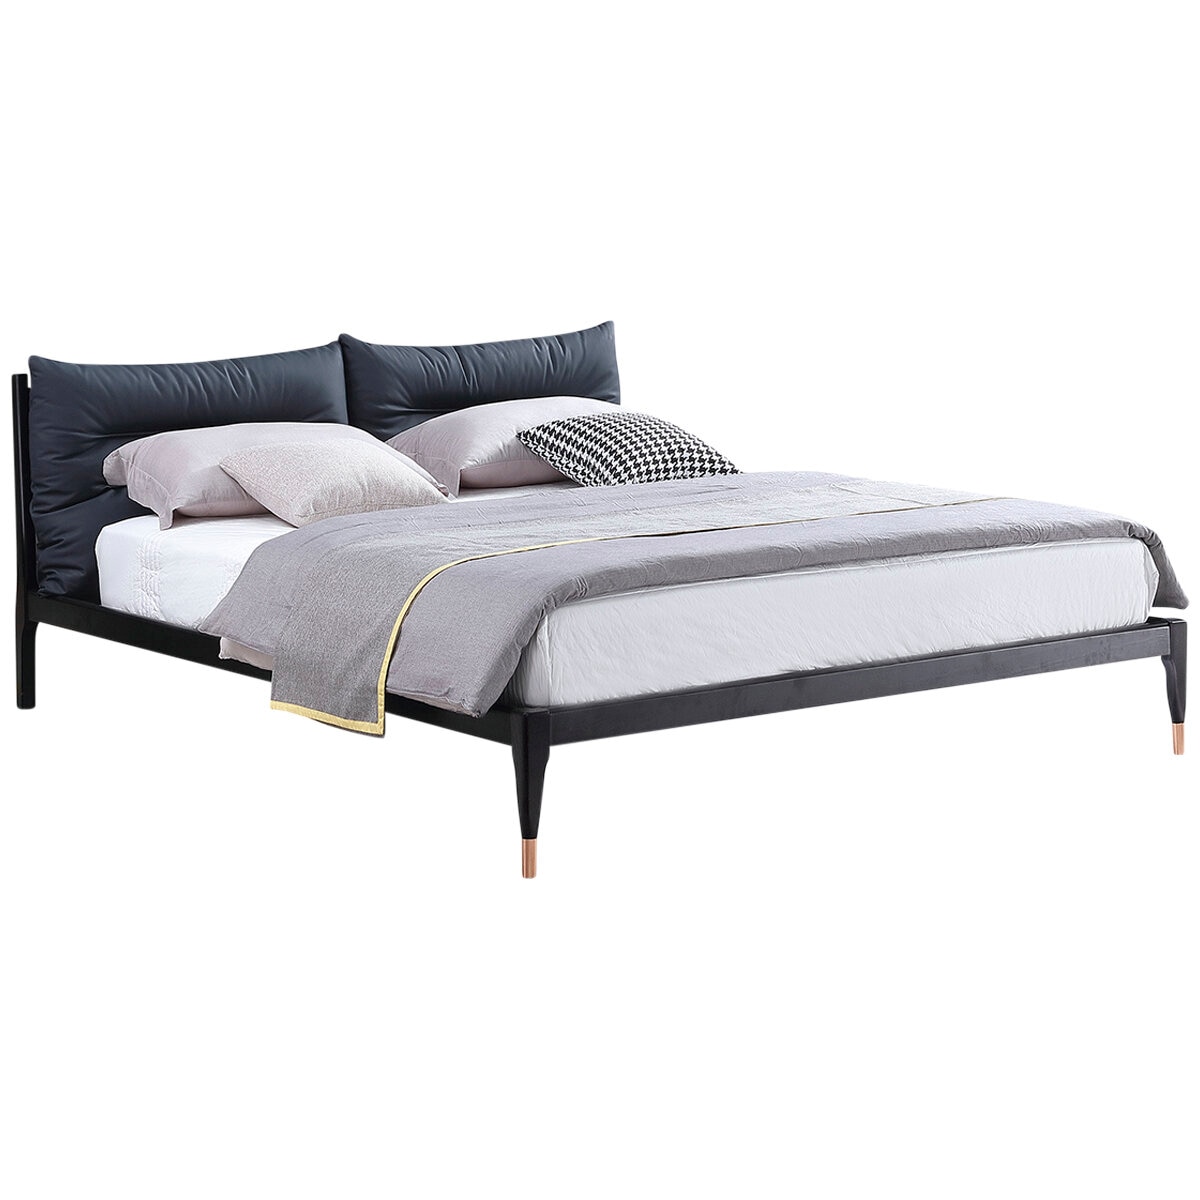 Moran Hagen King Bed with Encasement and Slats